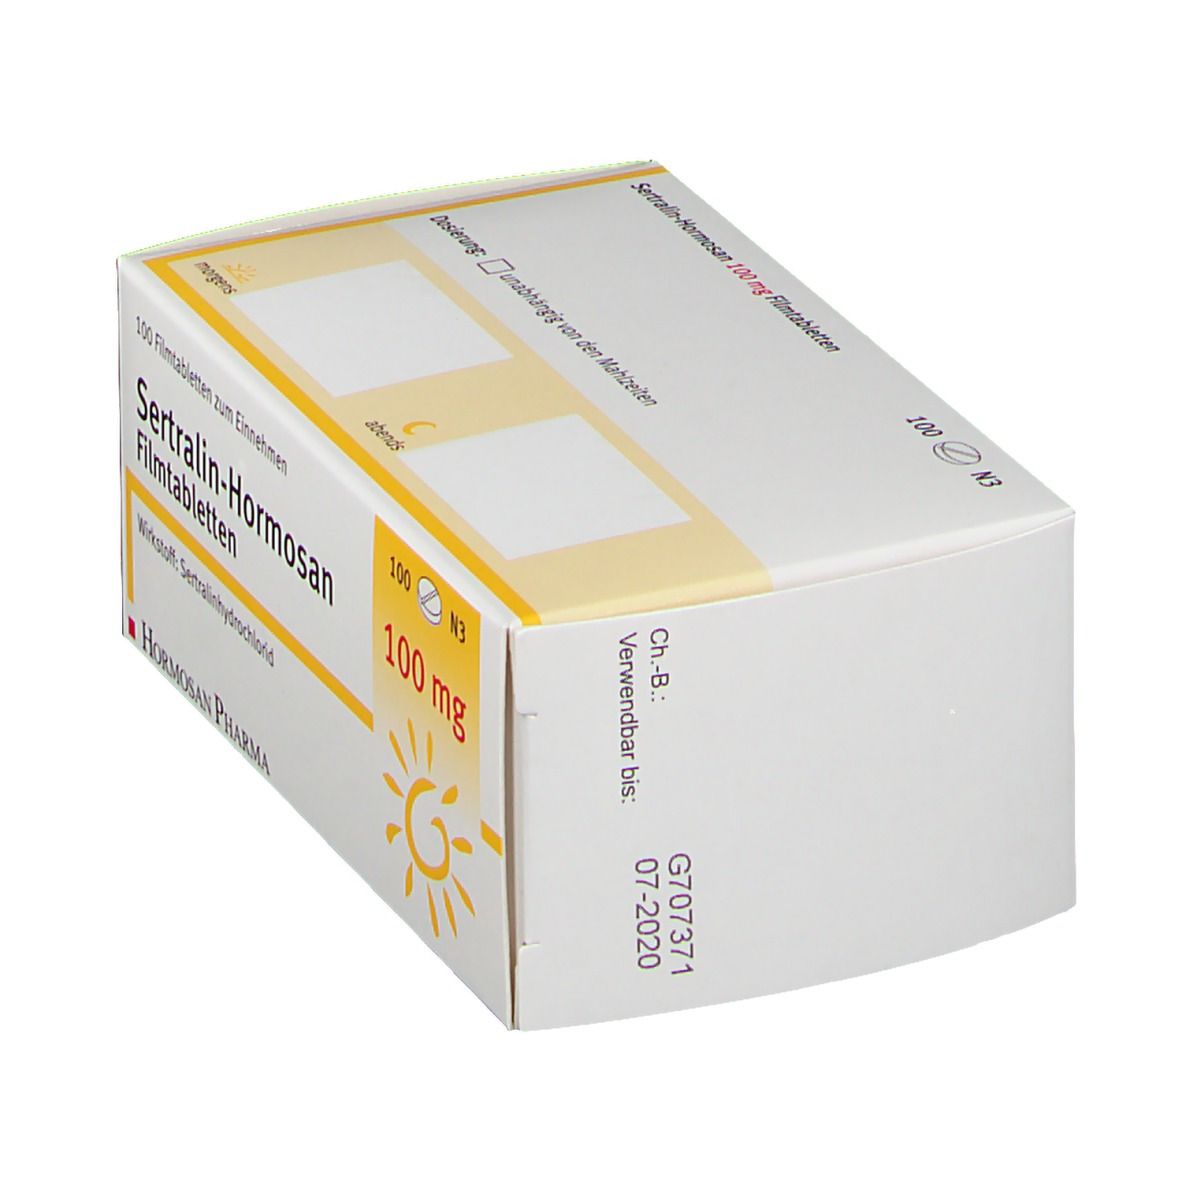 SERTRALIN Hormosan 100 mg Filmtabletten